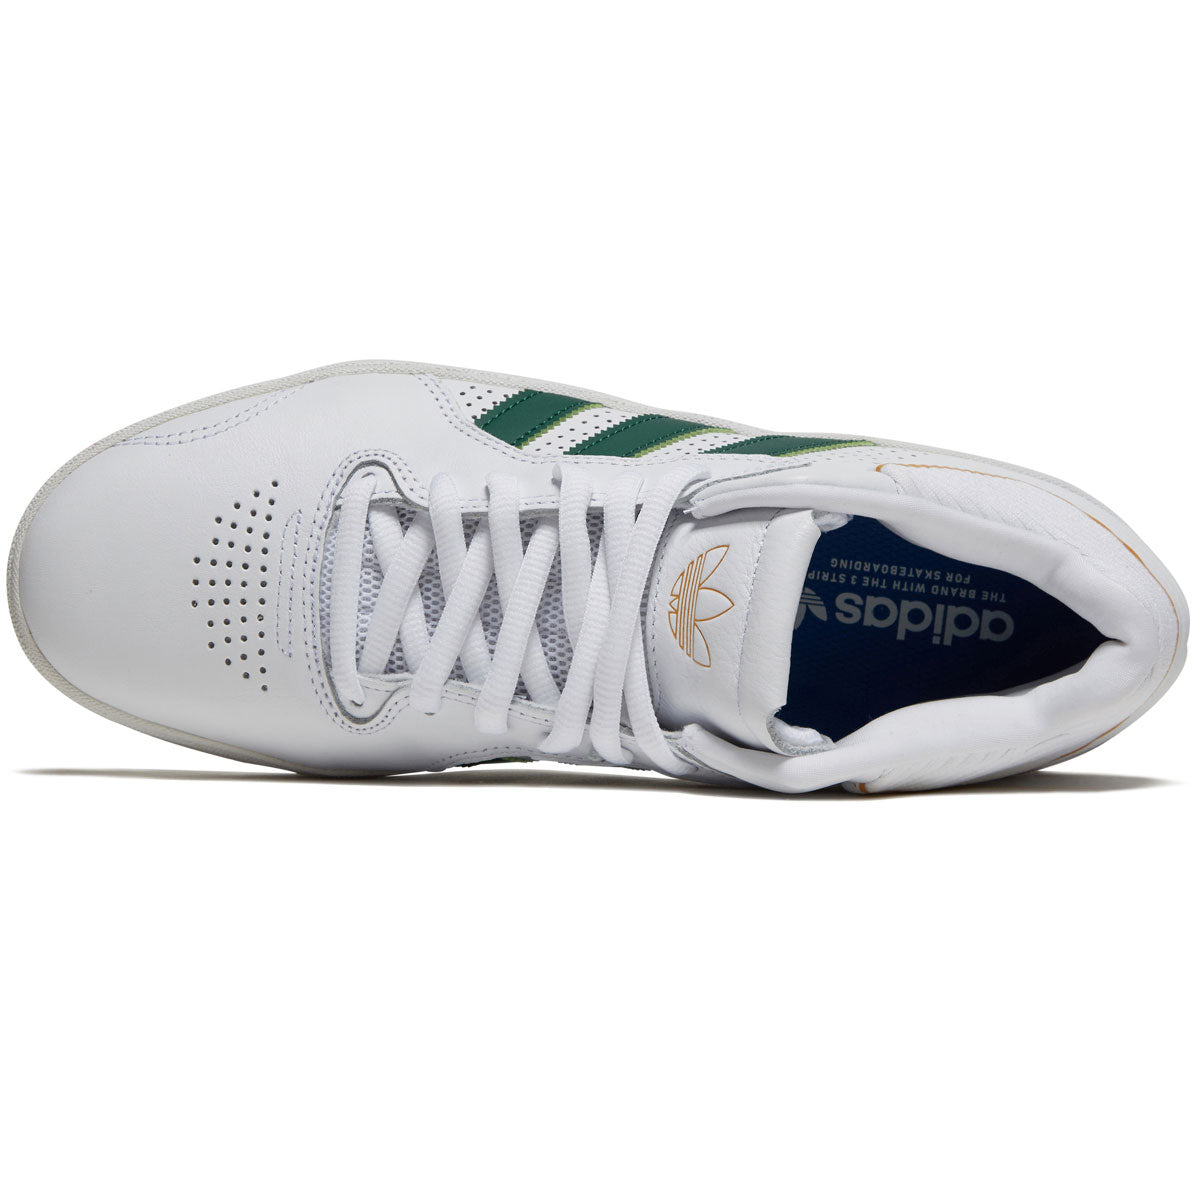 Adidas Tyshawn Shoes - White/Dark Green/Bluebird image 3